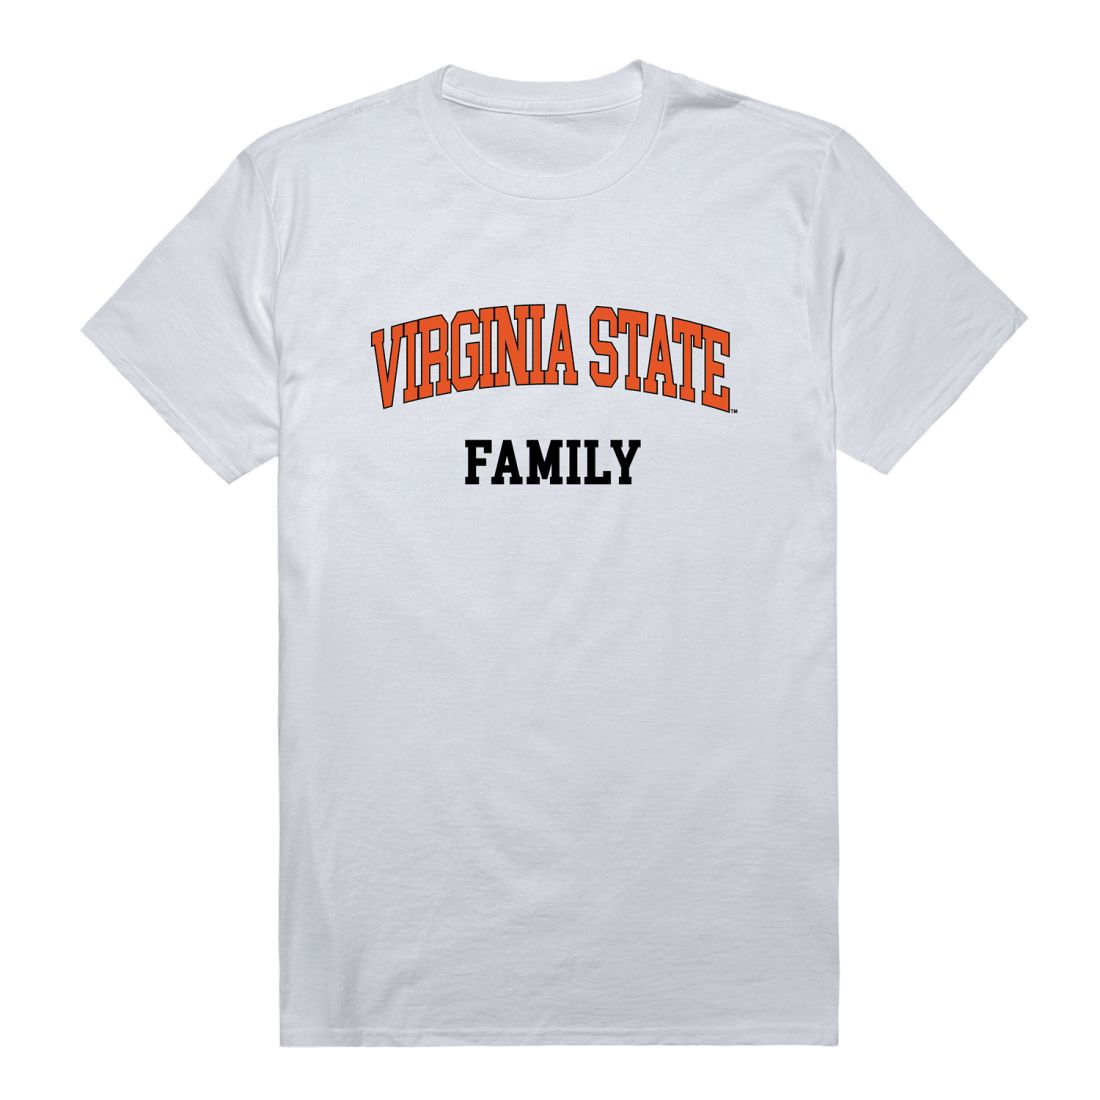 Virginia State University Trojans Family T-Shirt